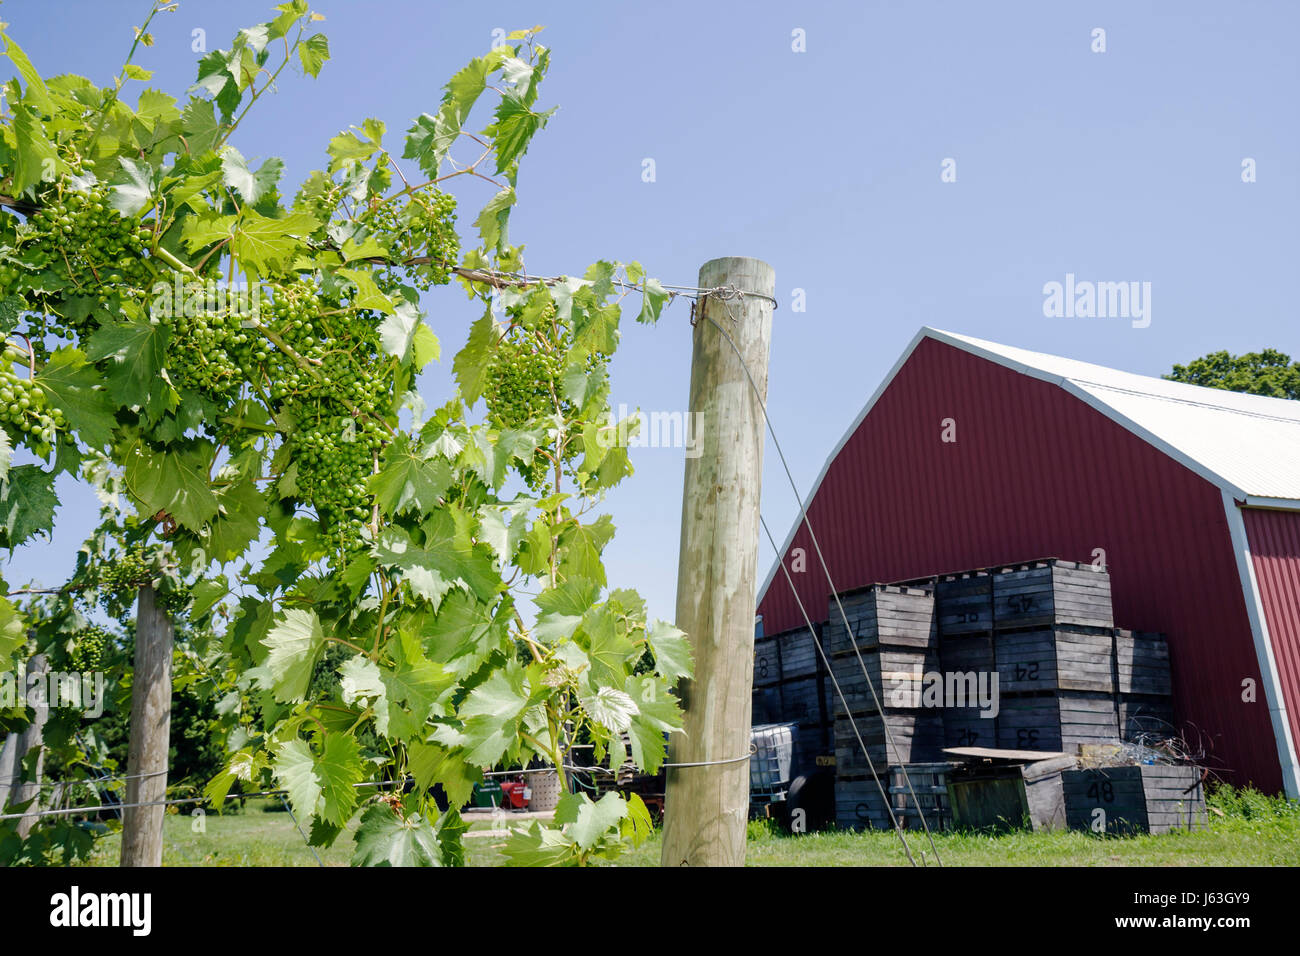 Michigan Fennville,Fenn Valley Vineyards & Wine Cellar,viticulture,grapes,fruit,plants,shed,crates,barn,vines,post,MI080715054 Stock Photo